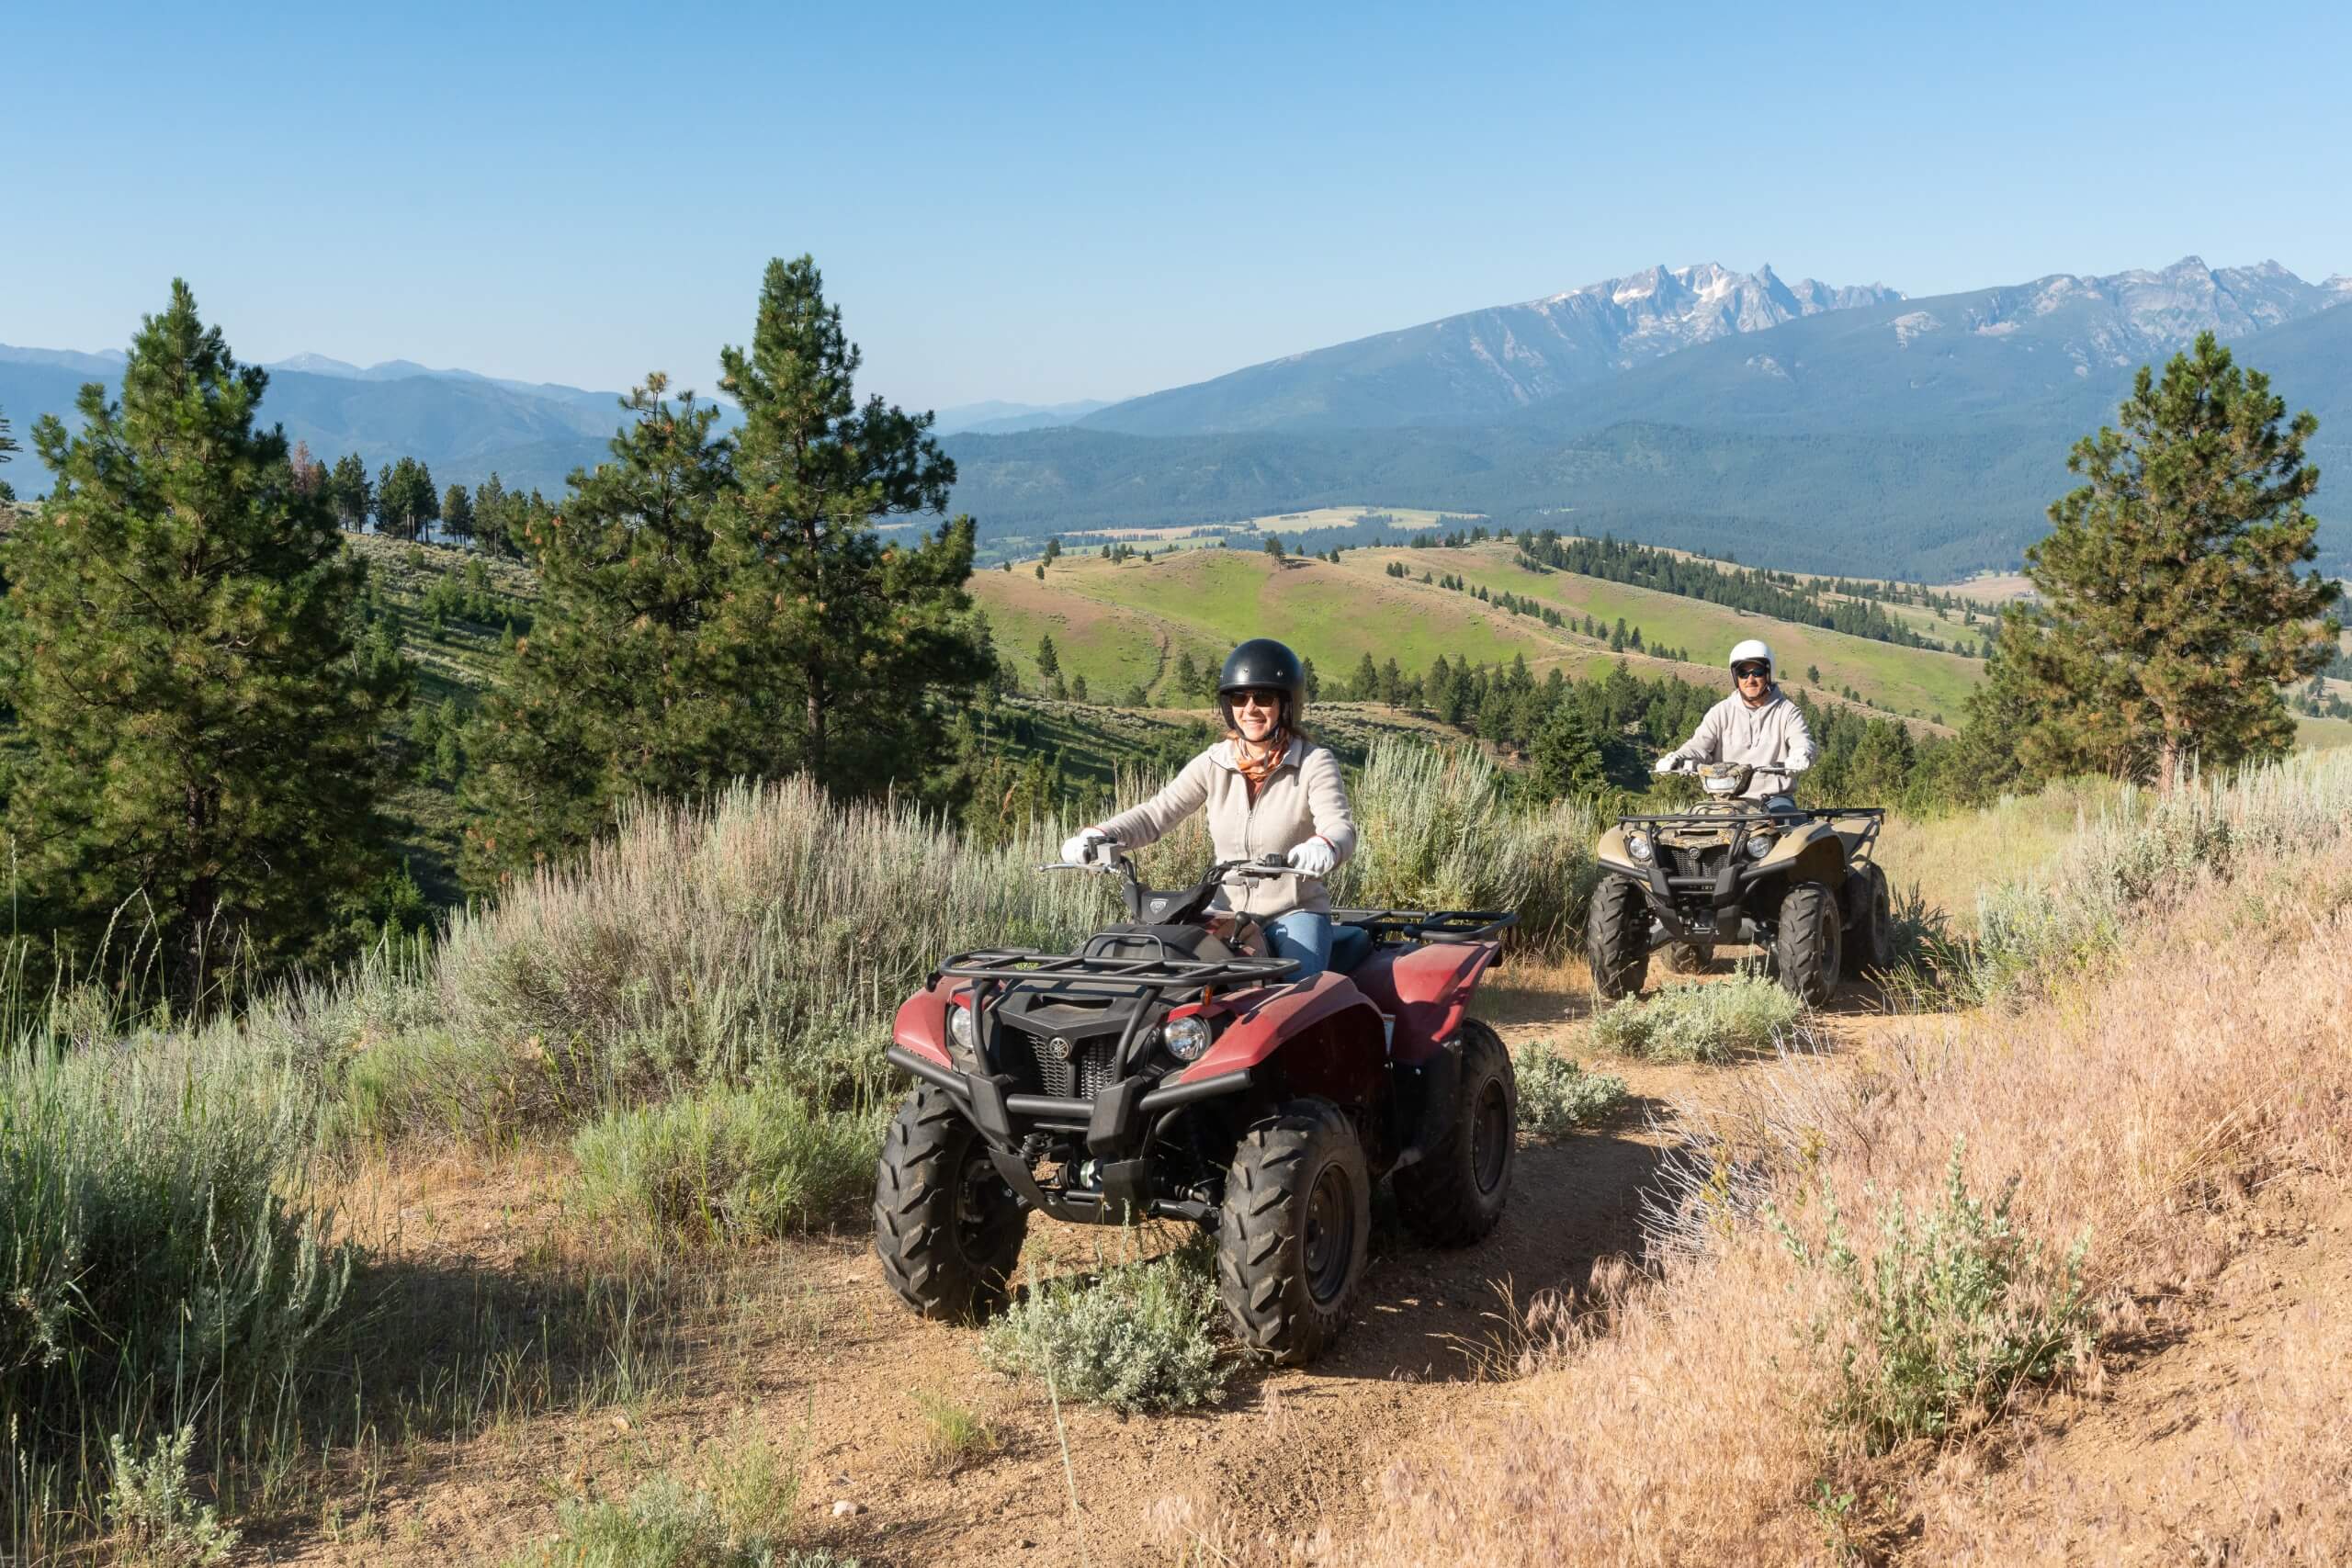 Guests riding ATVs across a mountain landscape